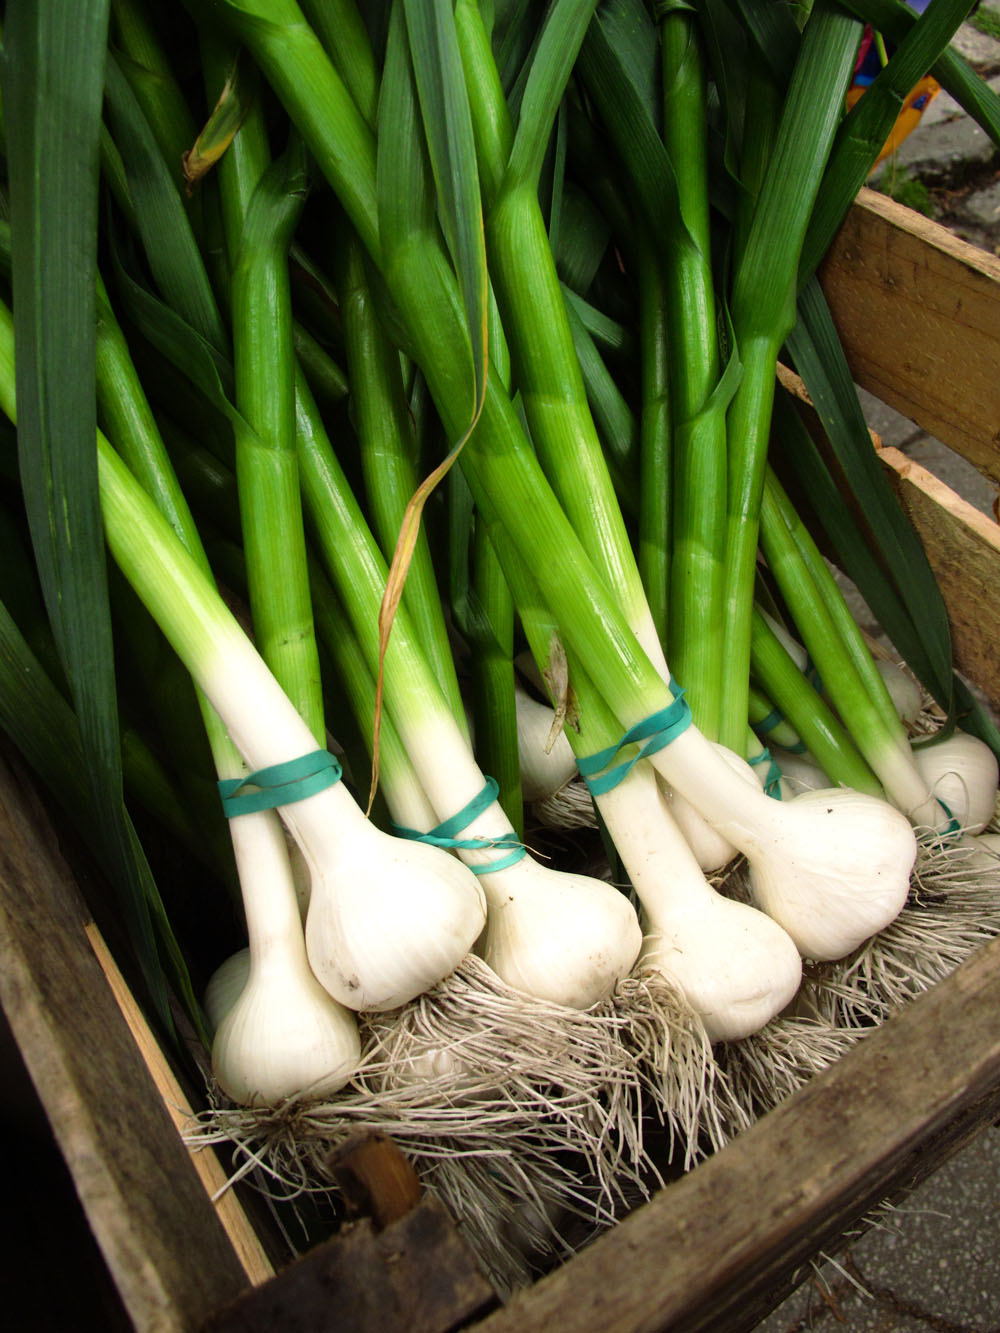 Farmers market spring garlic